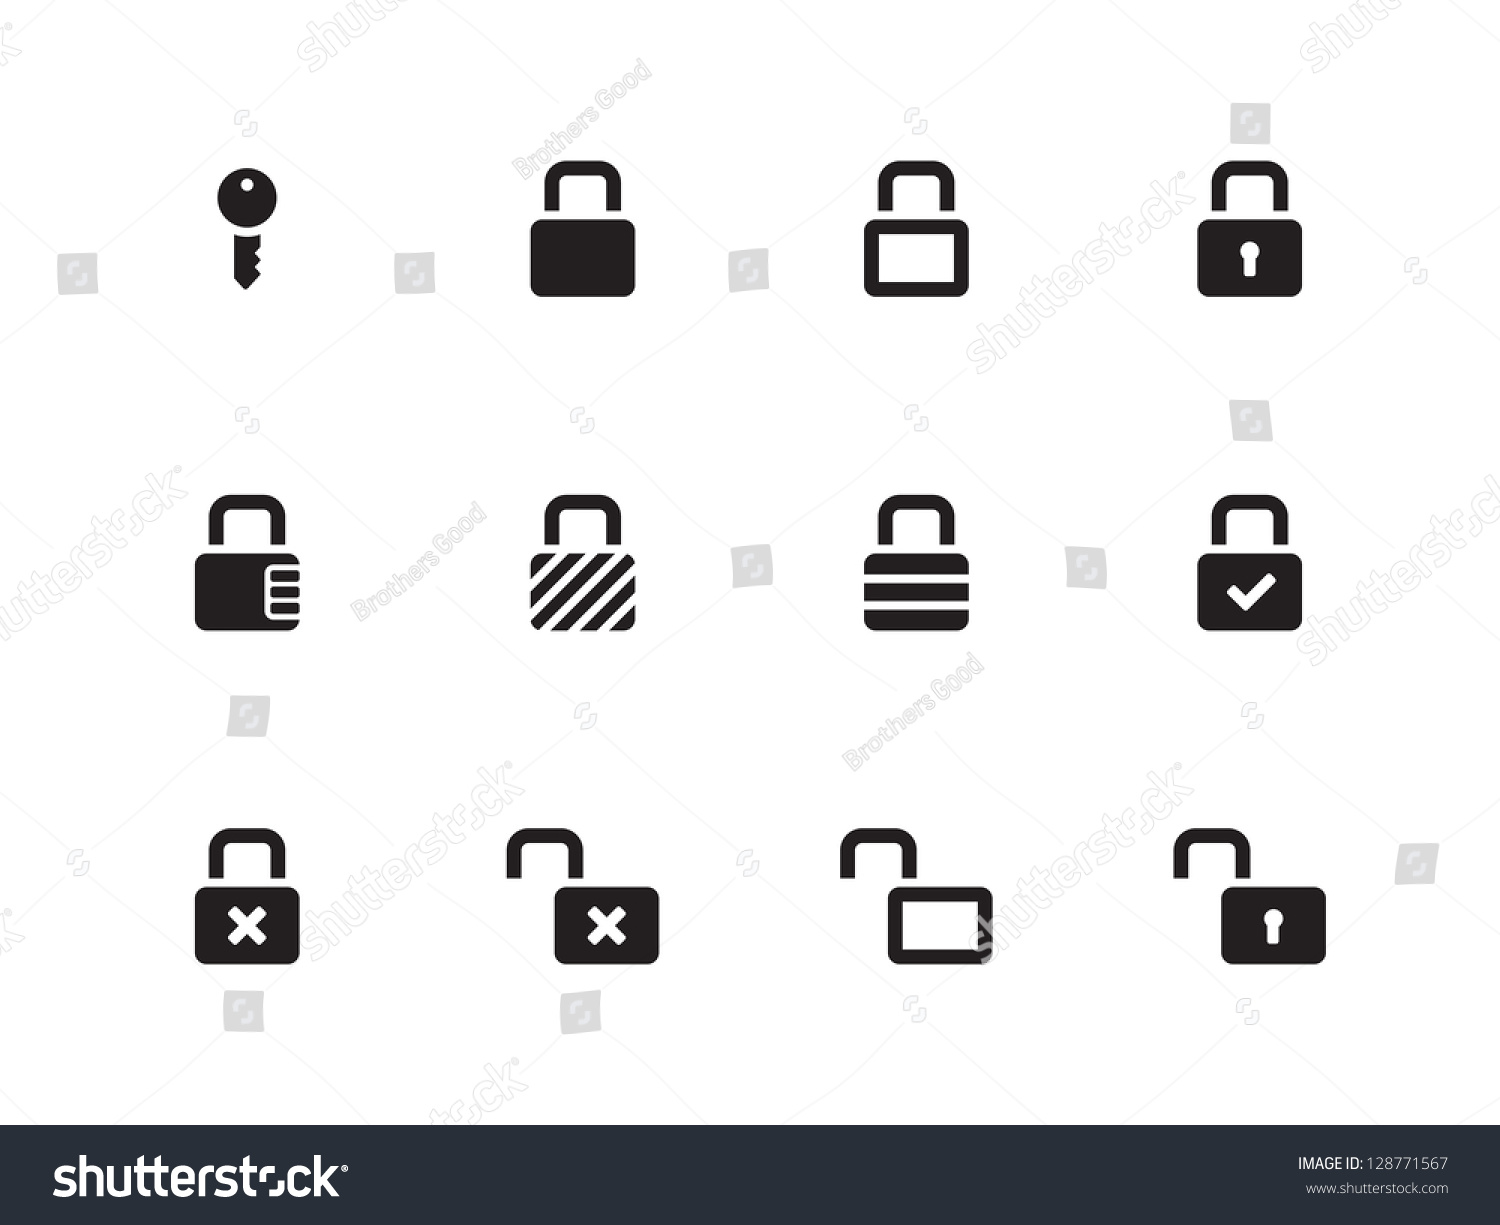 Locks Icons on white background. Vector illustration. #128771567